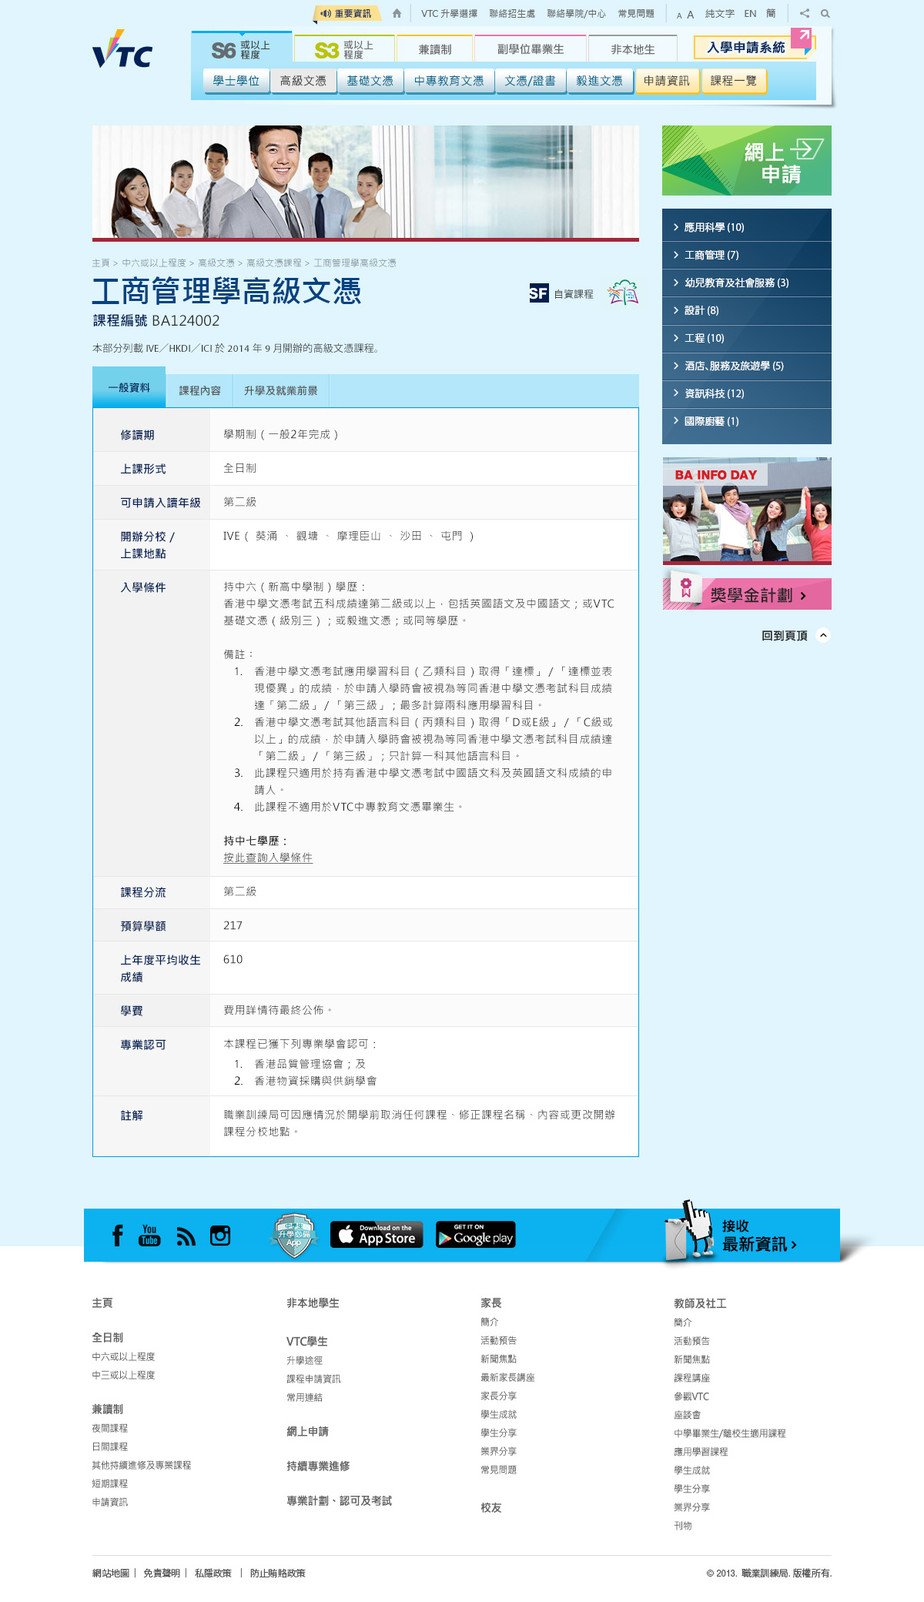 Vocational Training Council website screenshot for desktop version 8 of 8